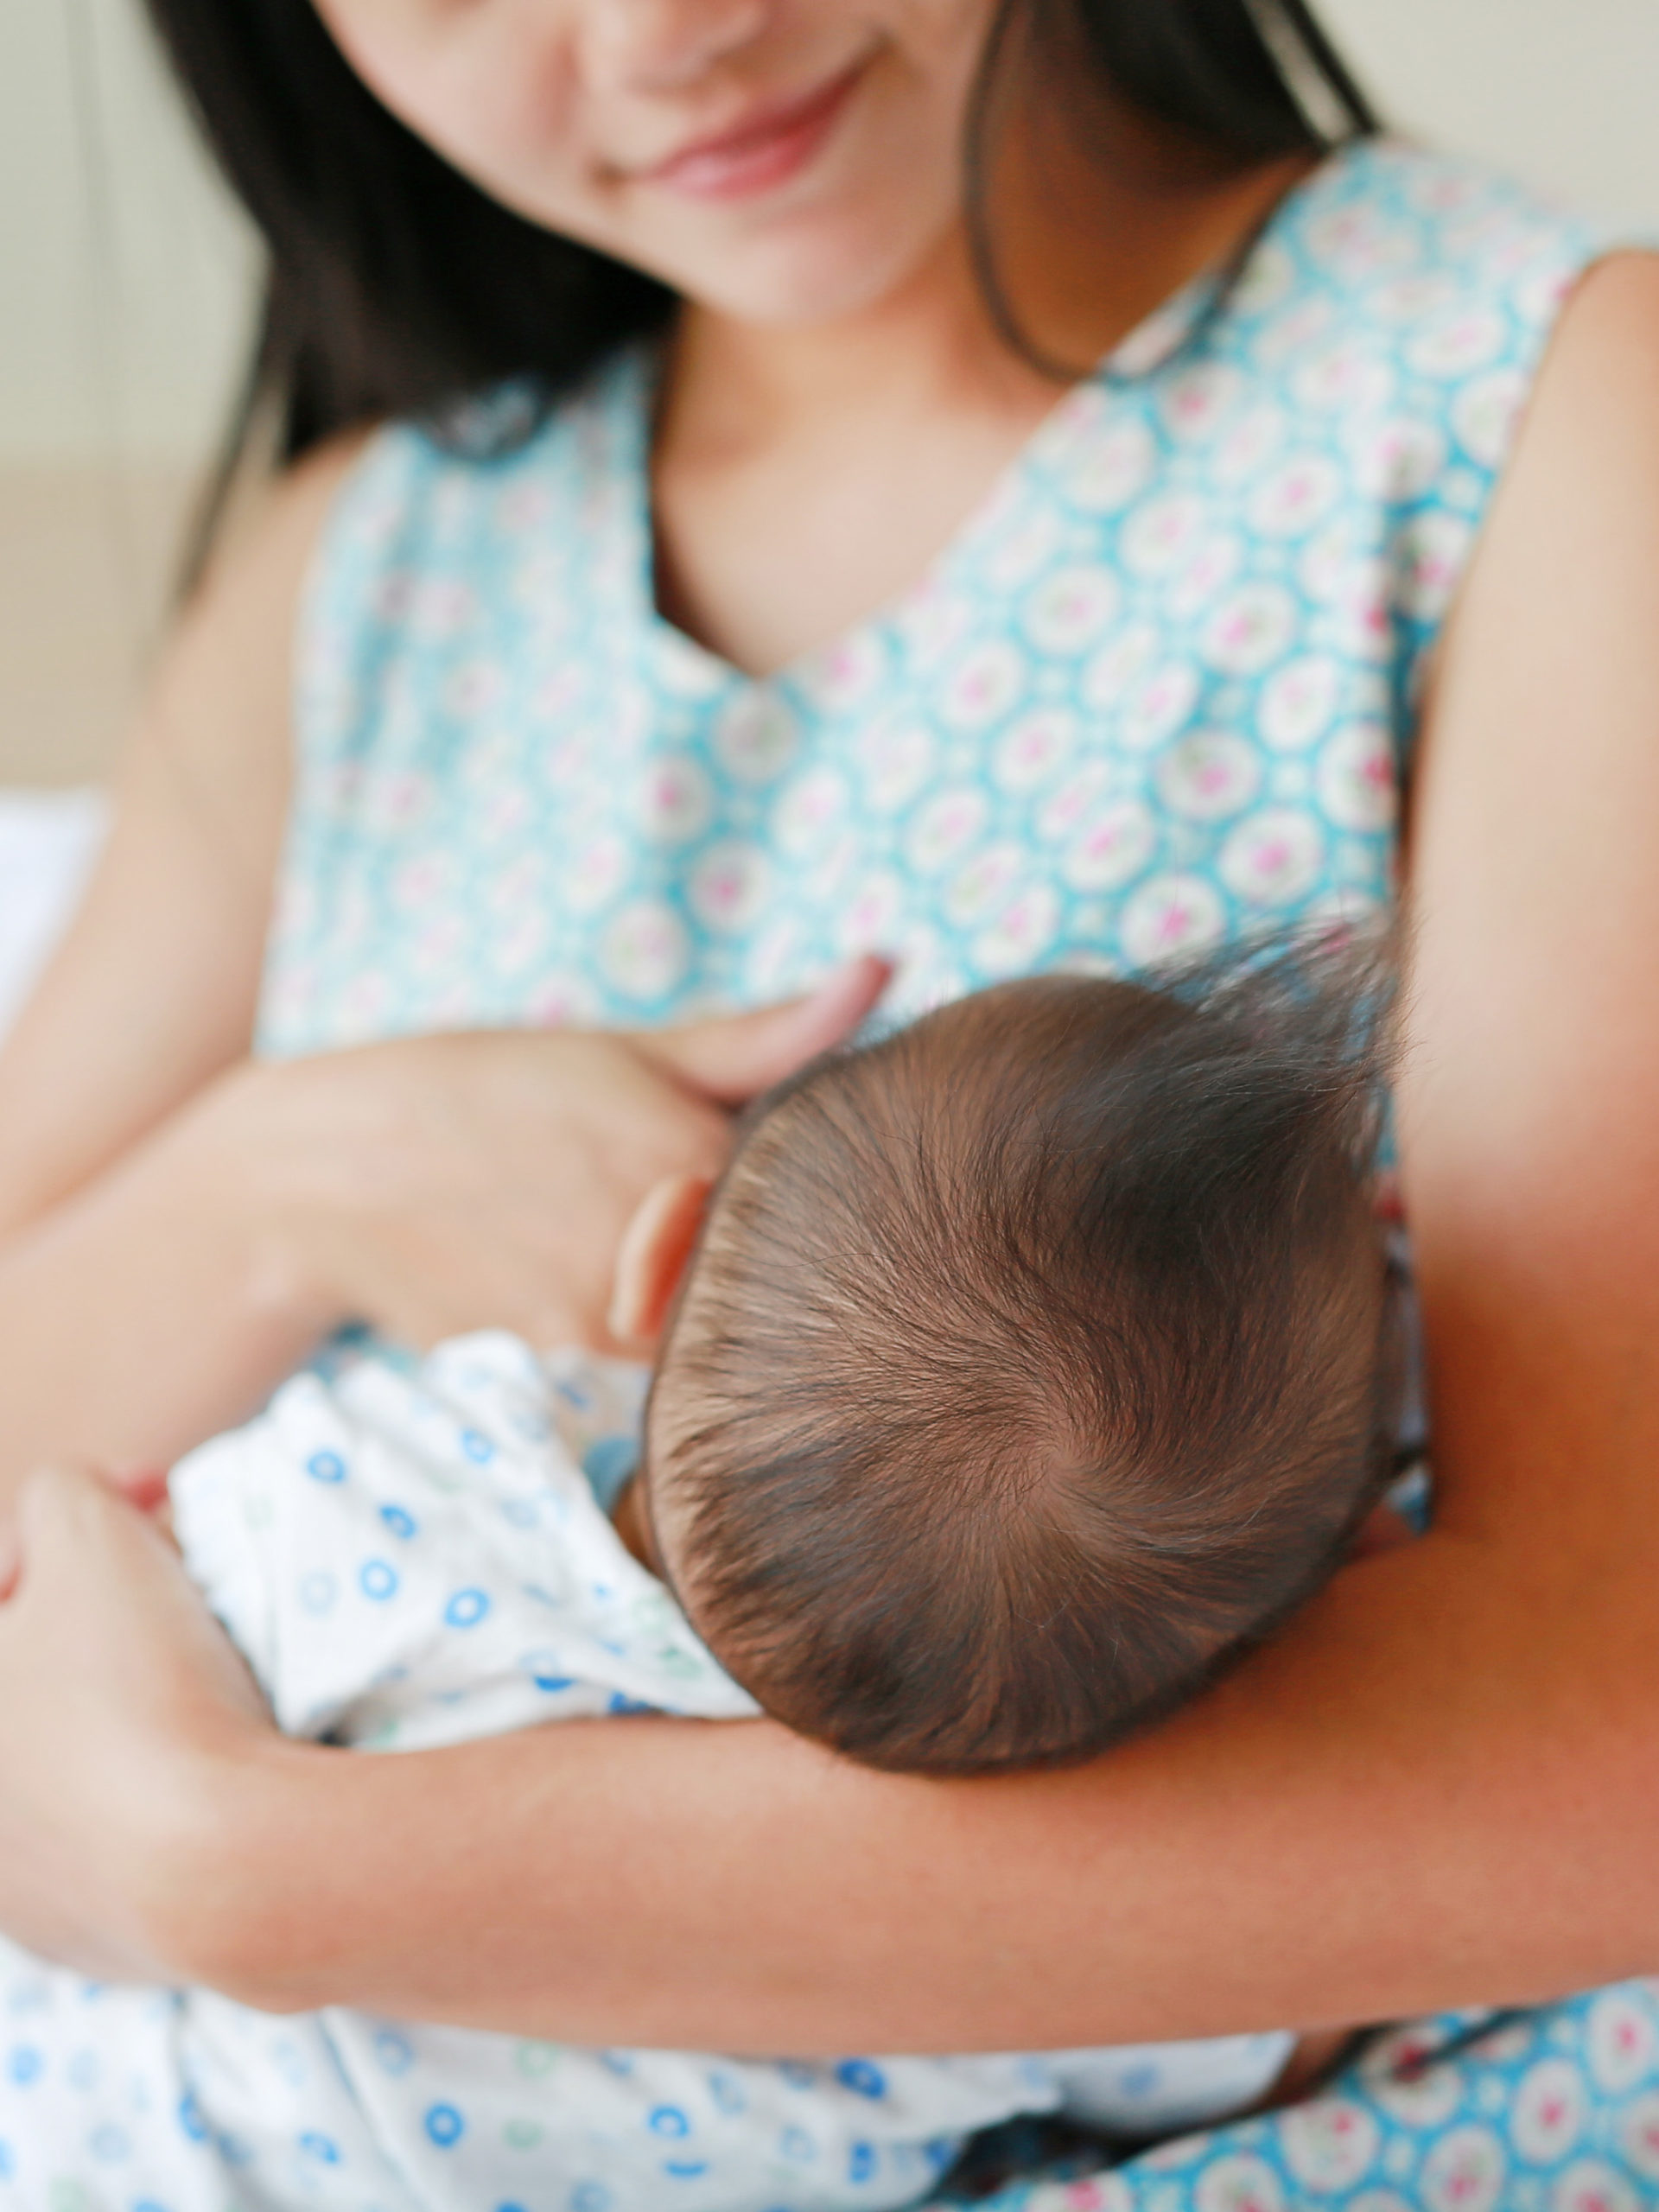 woman breastfeeds her baby